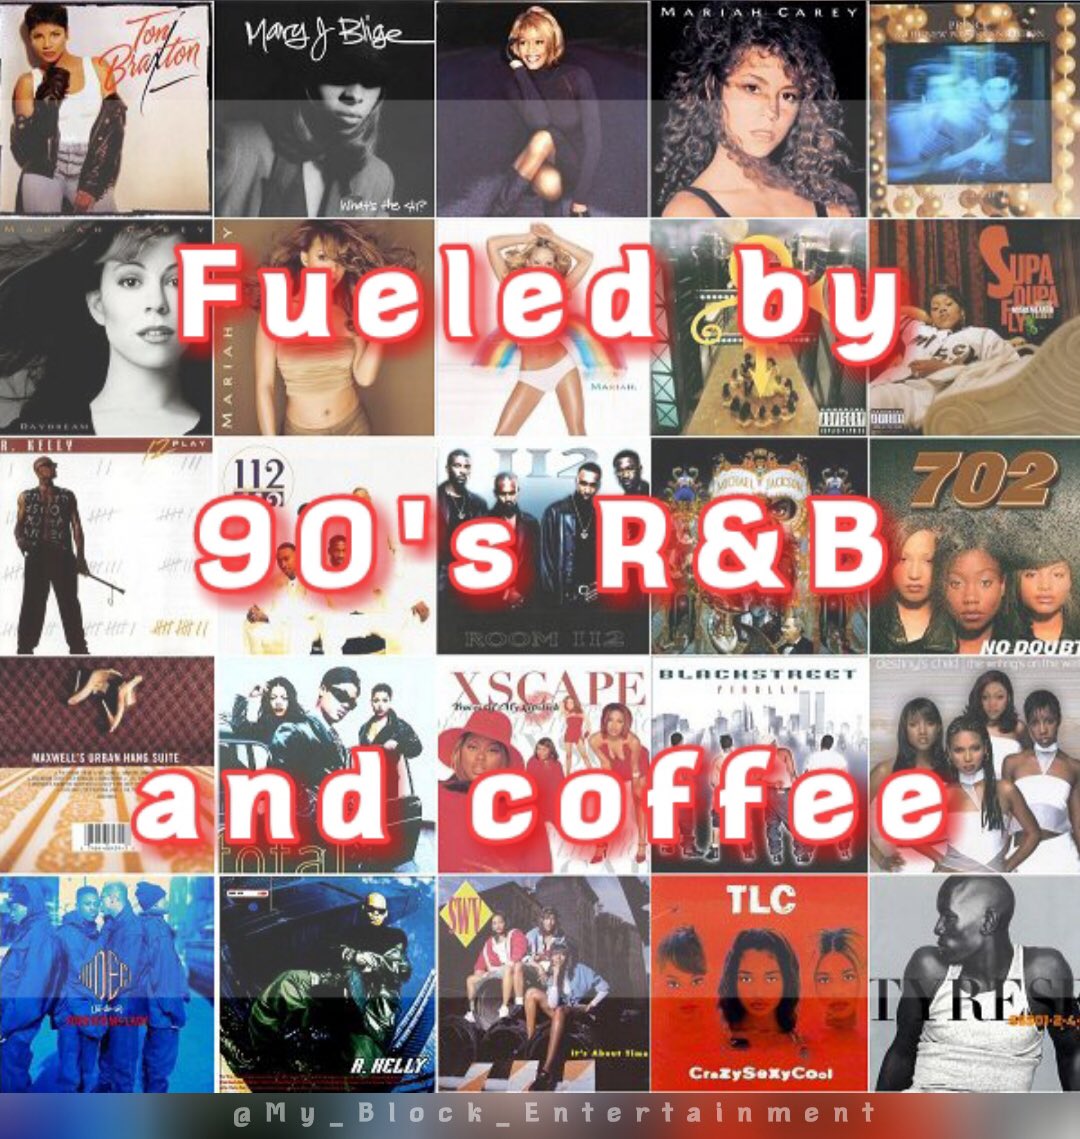 Don't underestimate the healing power of coffee and 90's R&B. ☕🎶  #TBT #ThrowbackMusic #ButFirstCoffee #FueledByCoffee #90sRnB #90sRnBJunkie #GrownFolksMusic #SlowJams #RandB #RealRnB #RnBVibes #RnBSoul #90sRnBMusic #RnBLovers #RnBClassics #RnBSong #OldSchoolRnB #OldSchoolJams